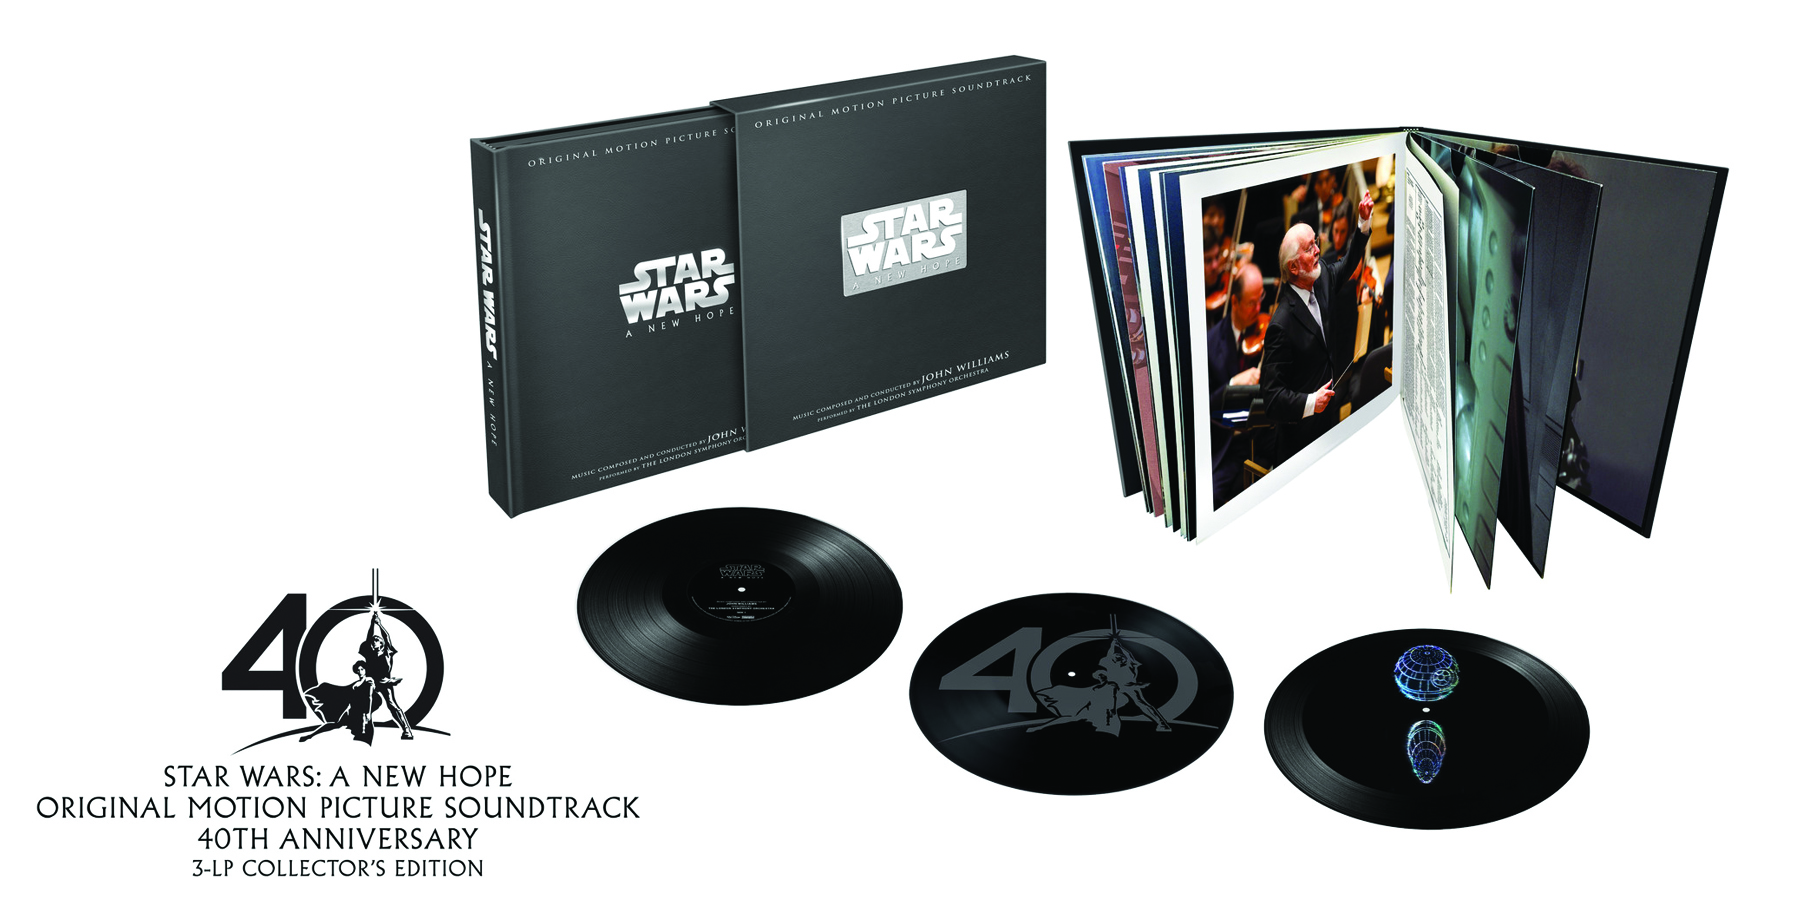 Star Wars: A New Hope 3-LP Vinyl Album Boxed Set Of Composer John Williams' Oscar-Winning Score To Be Released On December 1